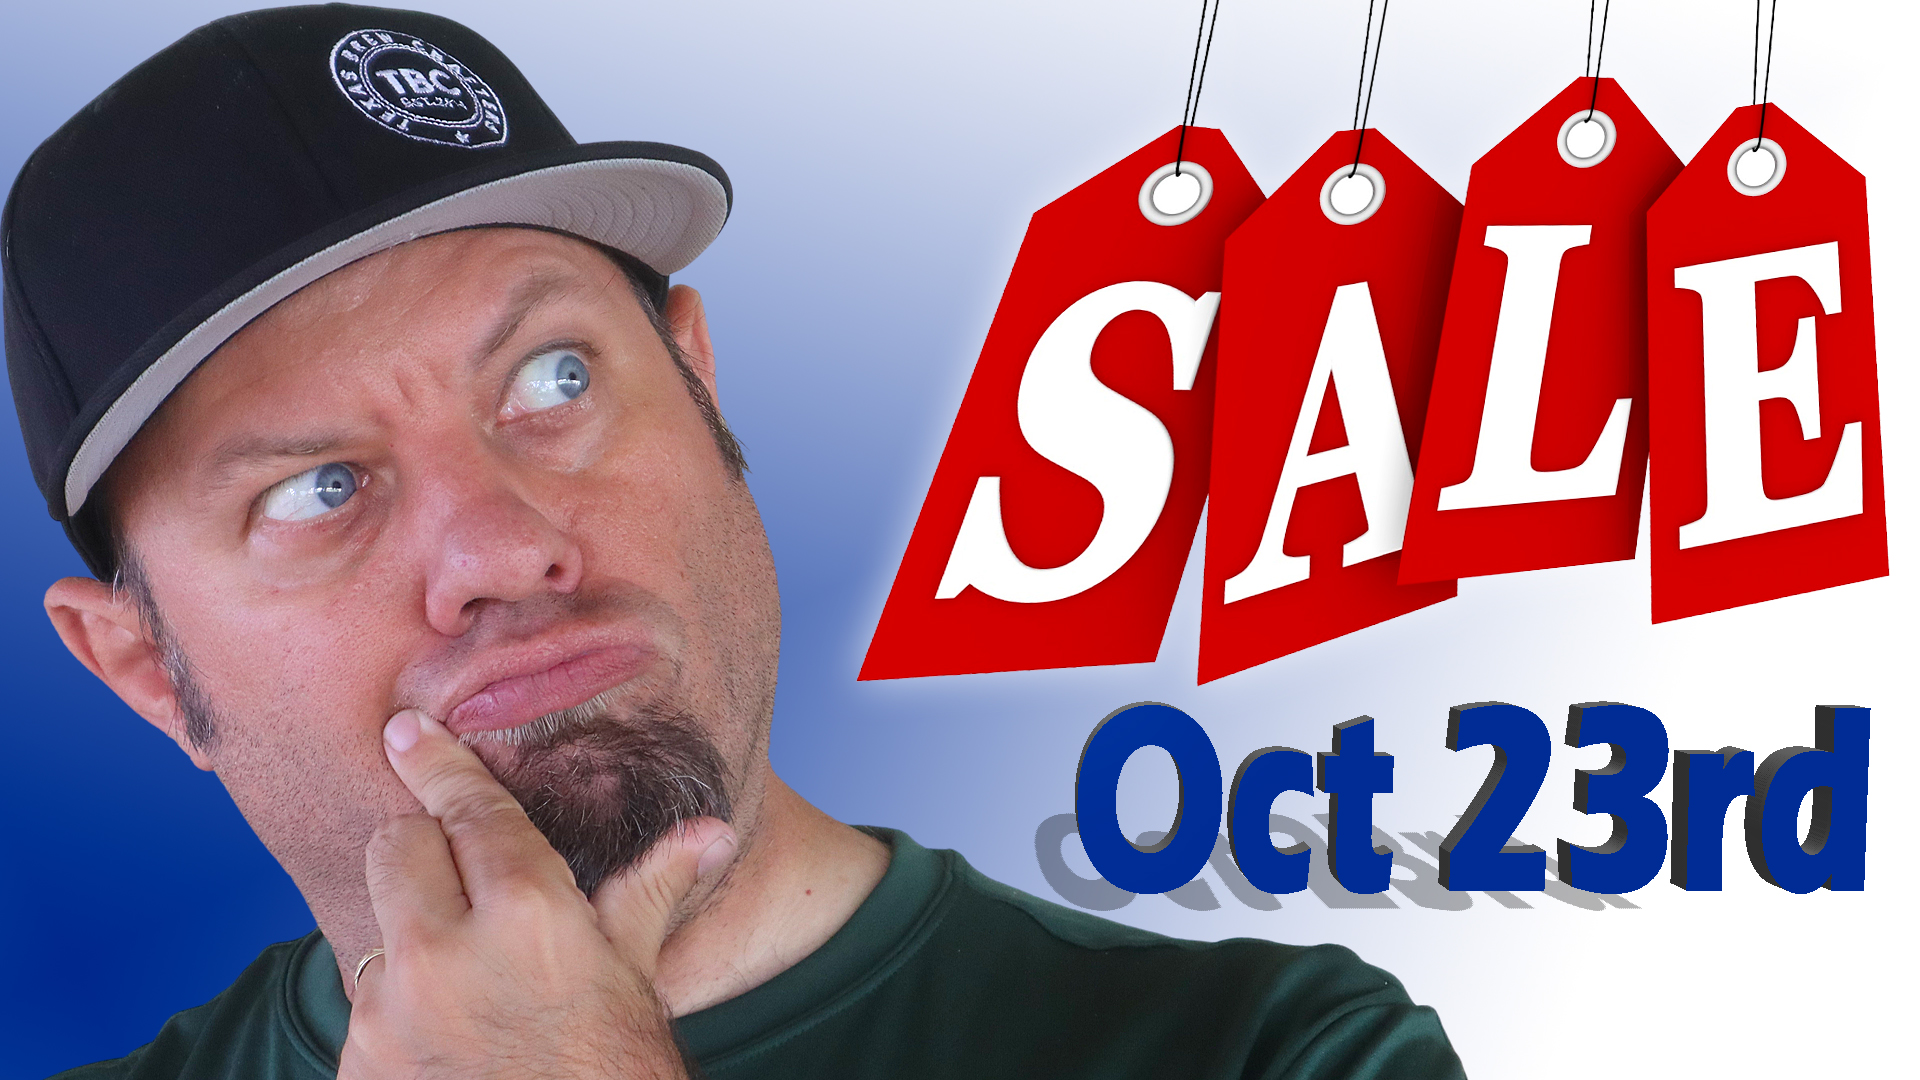 Episode 481: Ham Radio Shopping Deals for October 23rd